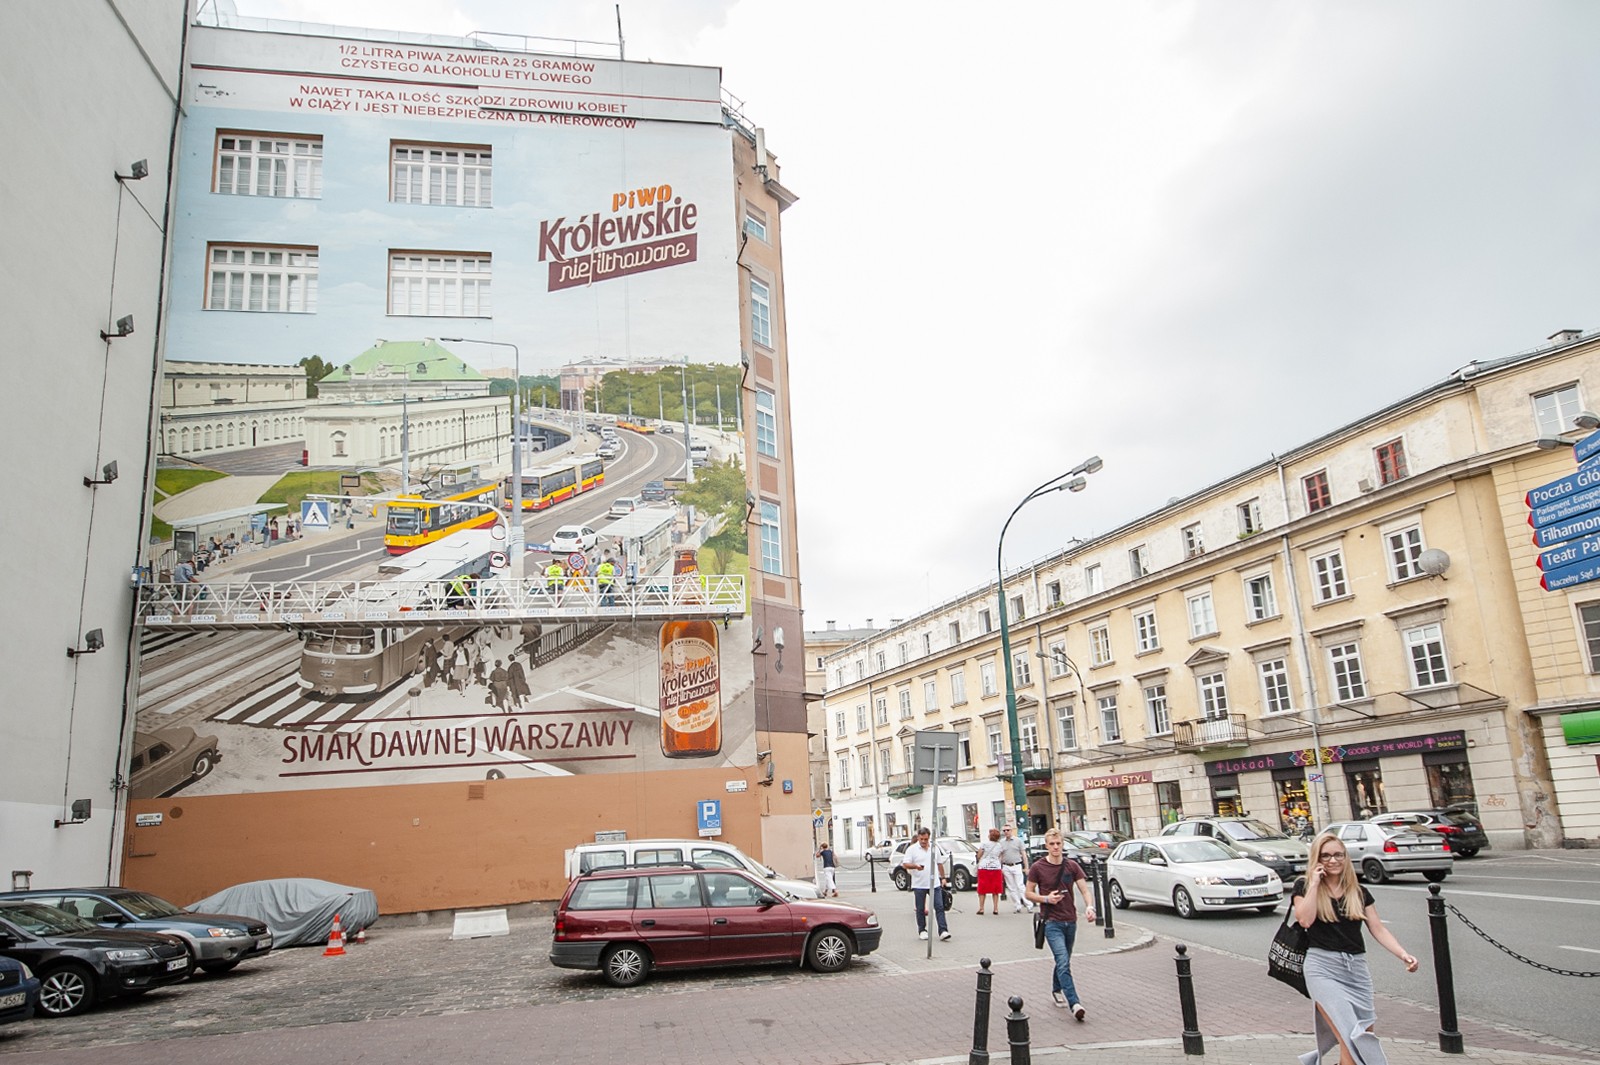 Dom Towarowy Bracia Jablkowscy seen form Krucza street with Krolewskie unfiltered beer mural | Krolewskie unfiltered | Portfolio